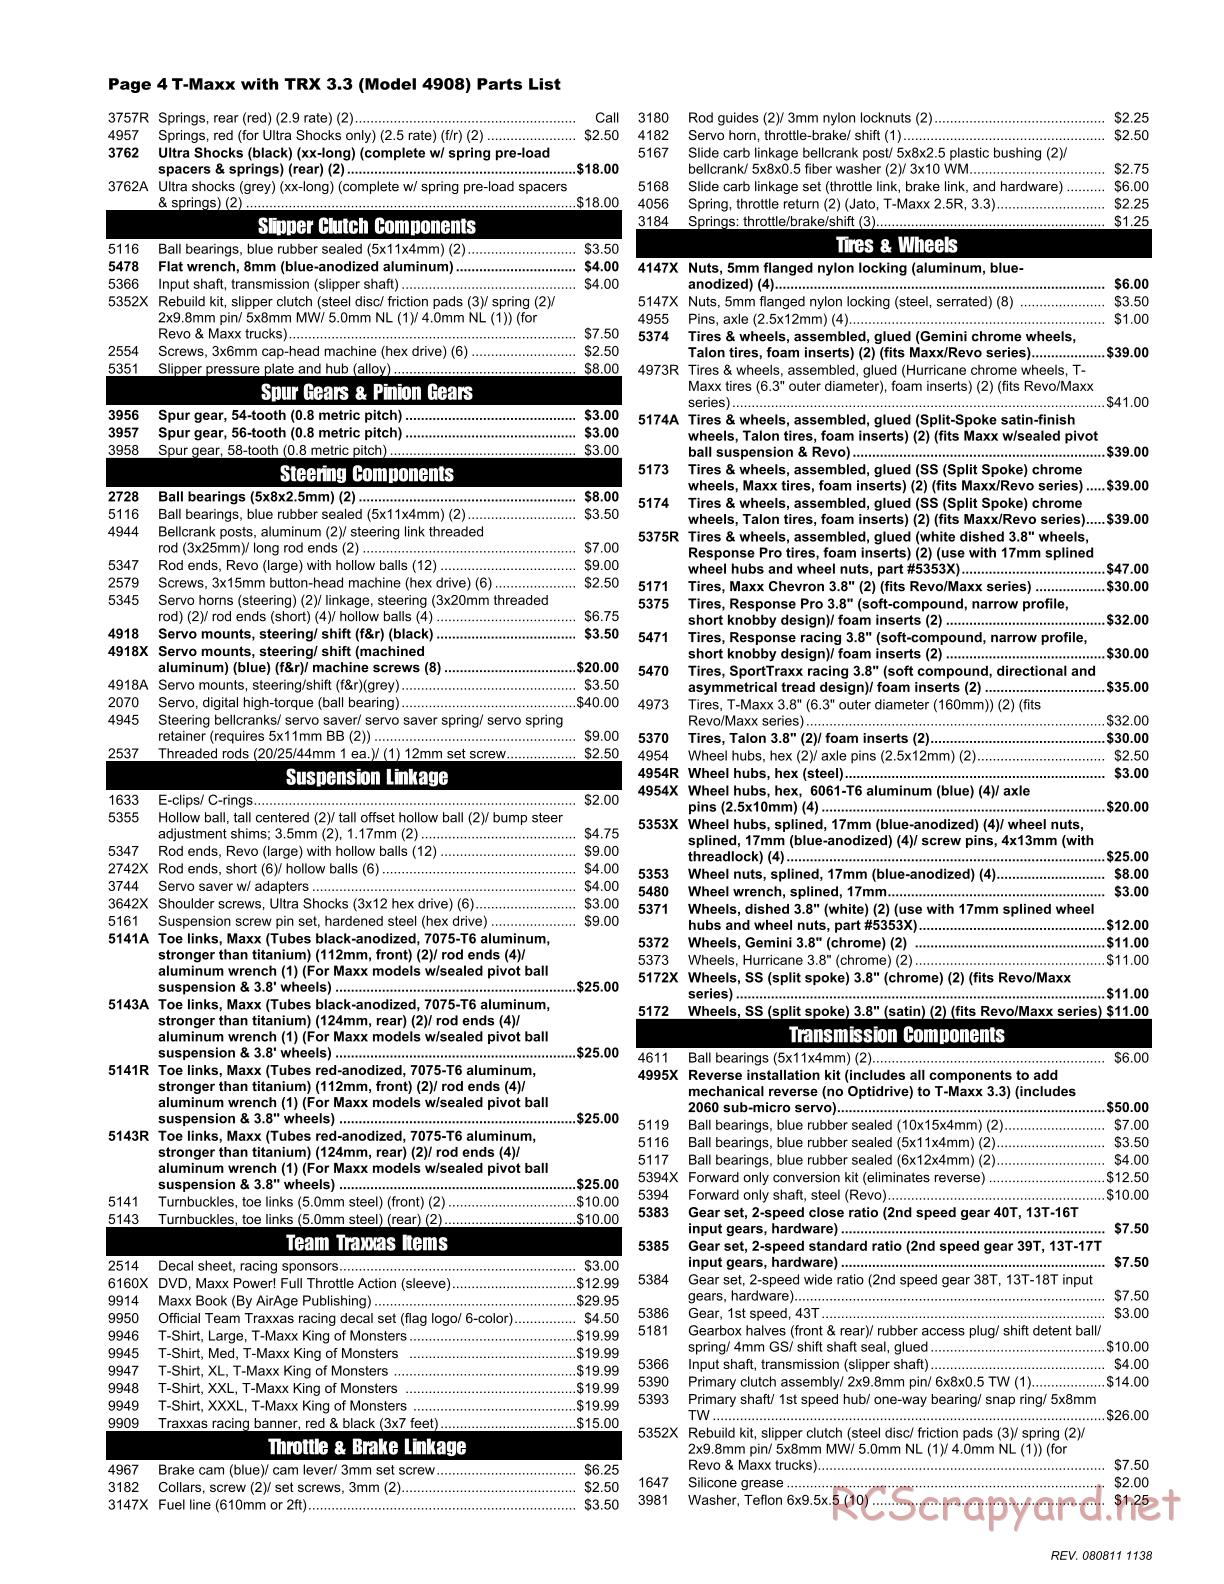 Traxxas - T-Maxx 3.3 (2008) - Parts List - Page 4